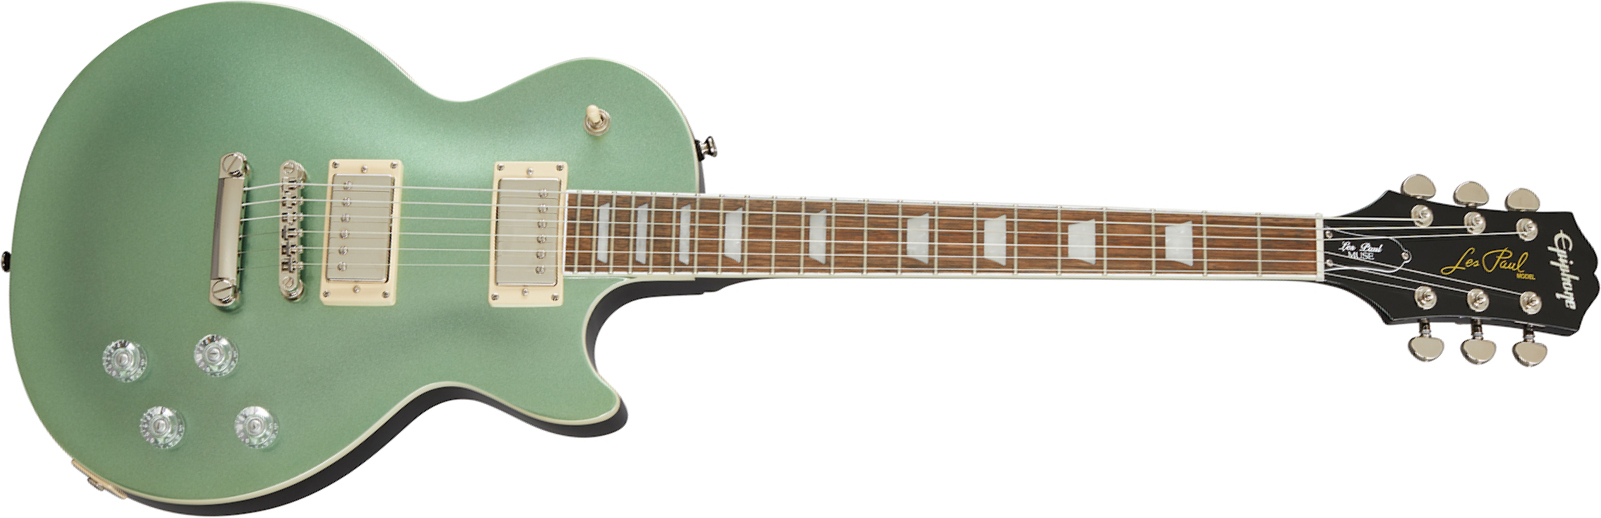 Epiphone Les Paul Muse Modern 2h Ht Lau - Wanderlust Green Metallic - Single cut electric guitar - Main picture